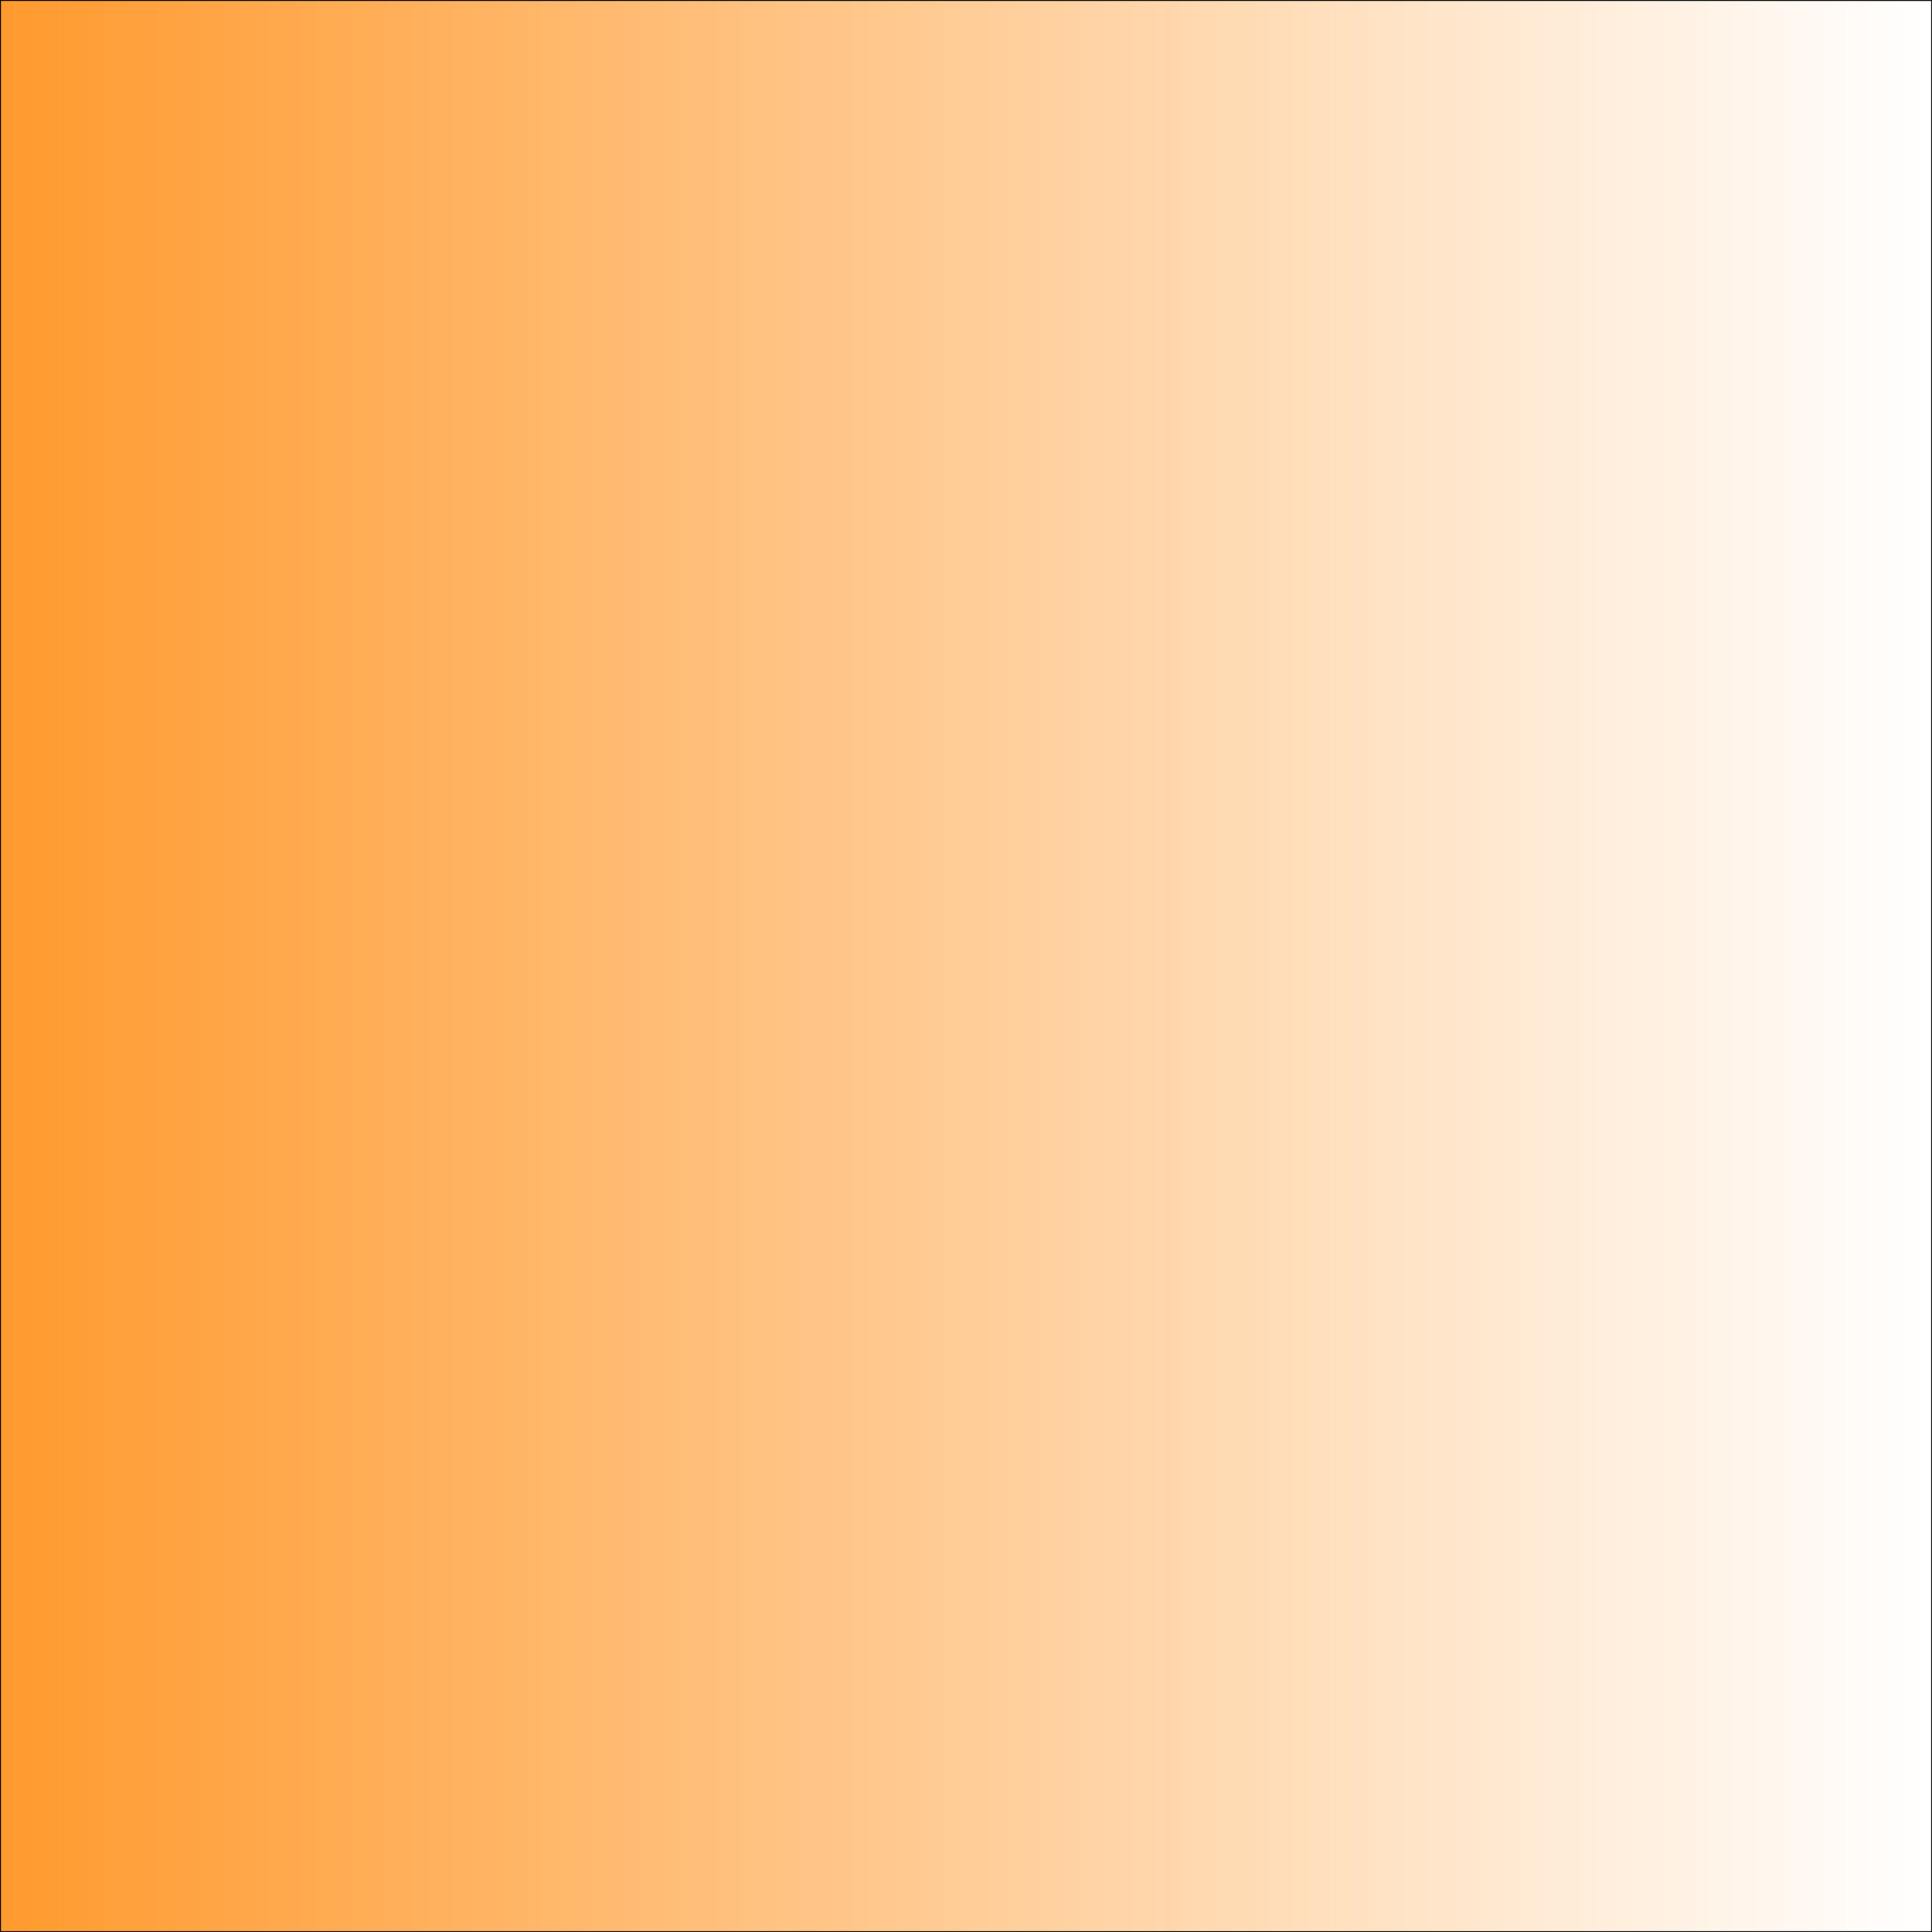 Orange and white gradient background